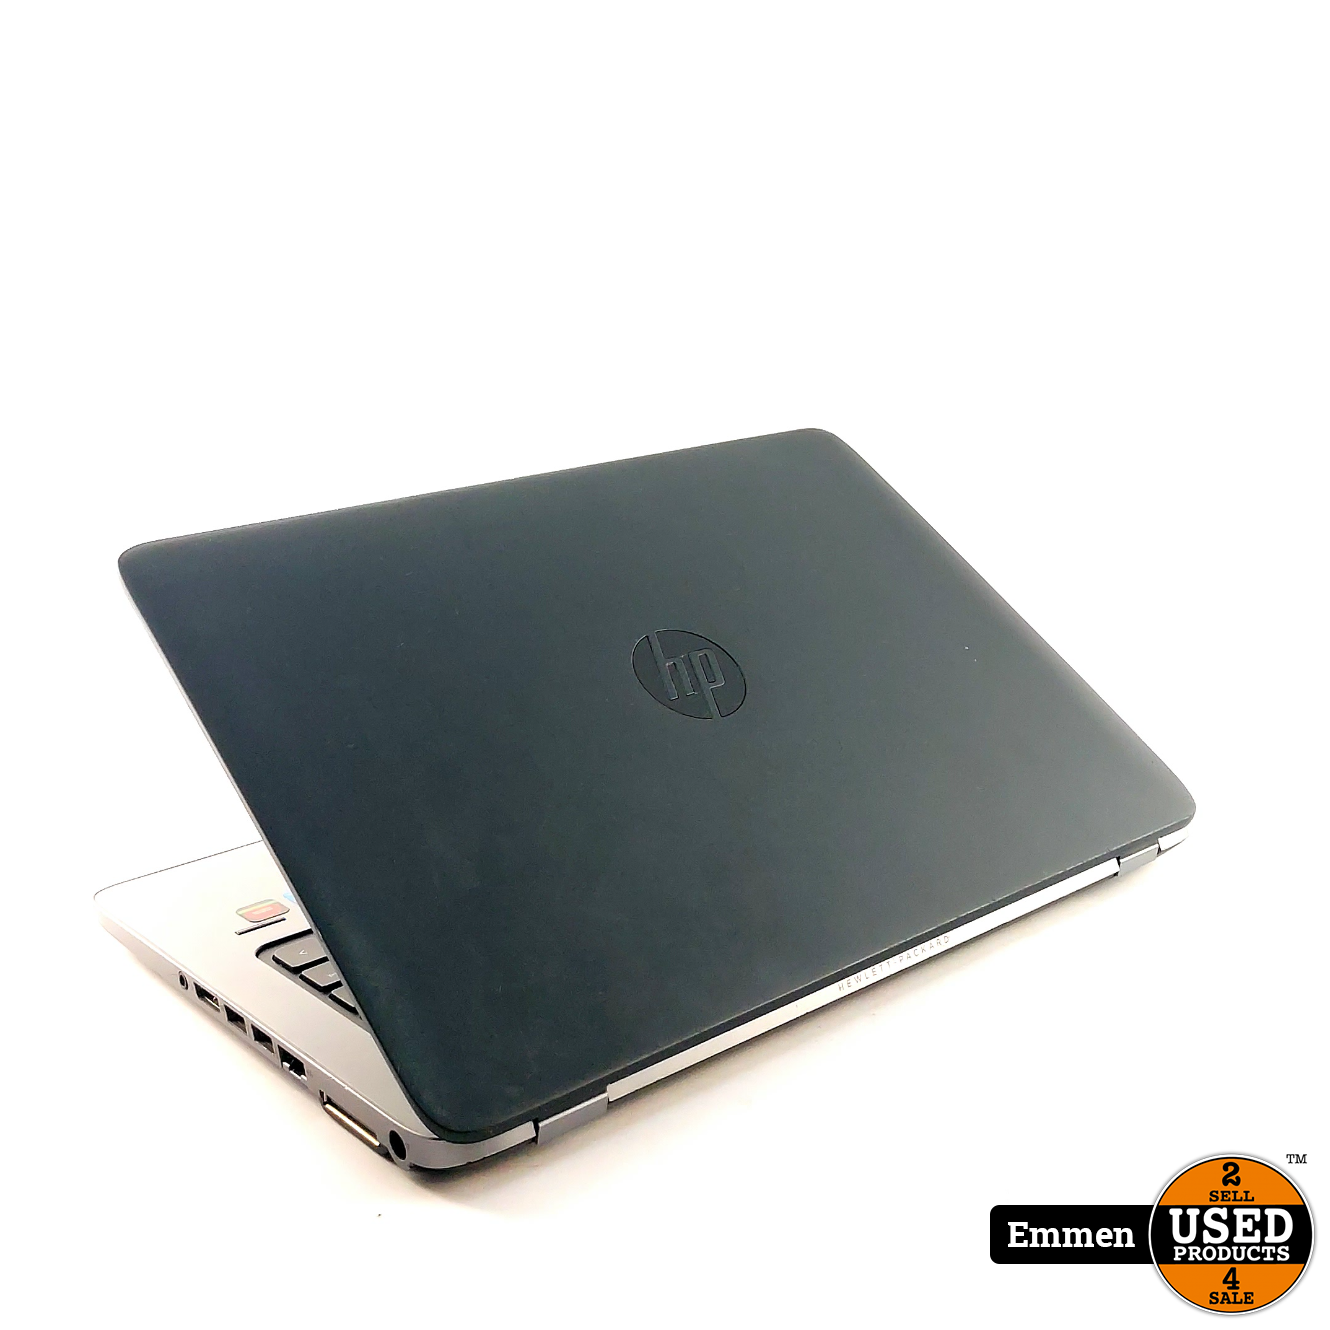 methodologie Wantrouwen code HP Elitebook 840 G1 Laptop, i7-4th, 8GB DDR3, 128GB SSD | In Nette Staat -  Used Products Emmen